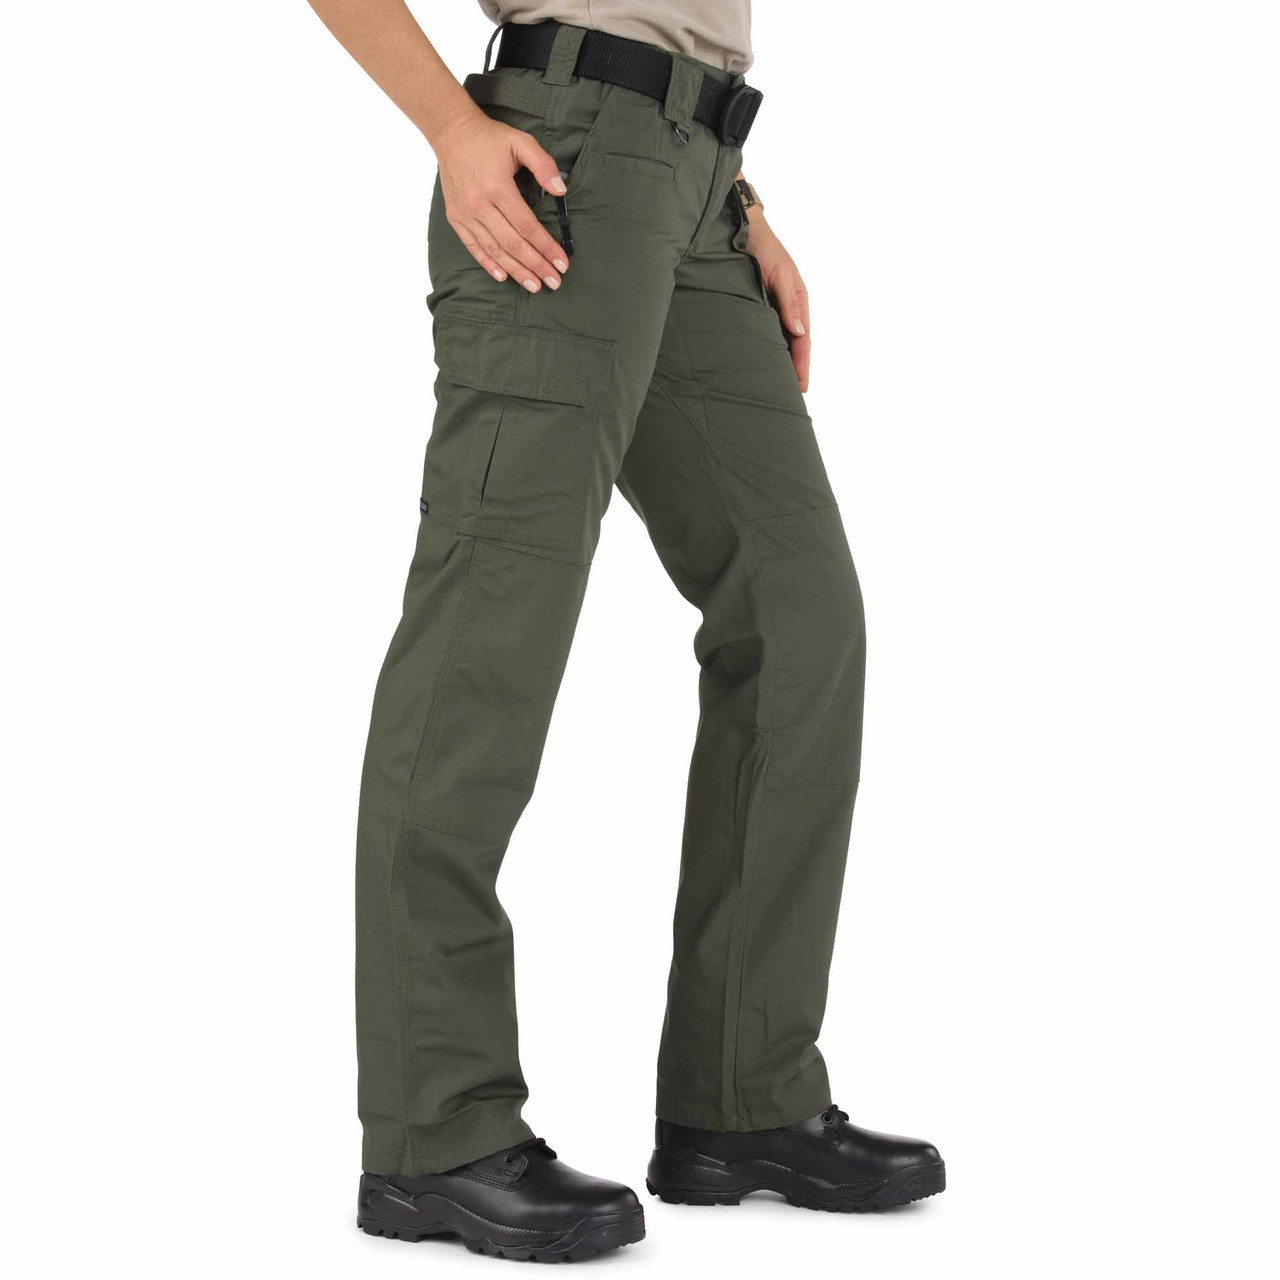 5.11 Tactical Women's TDU Pants